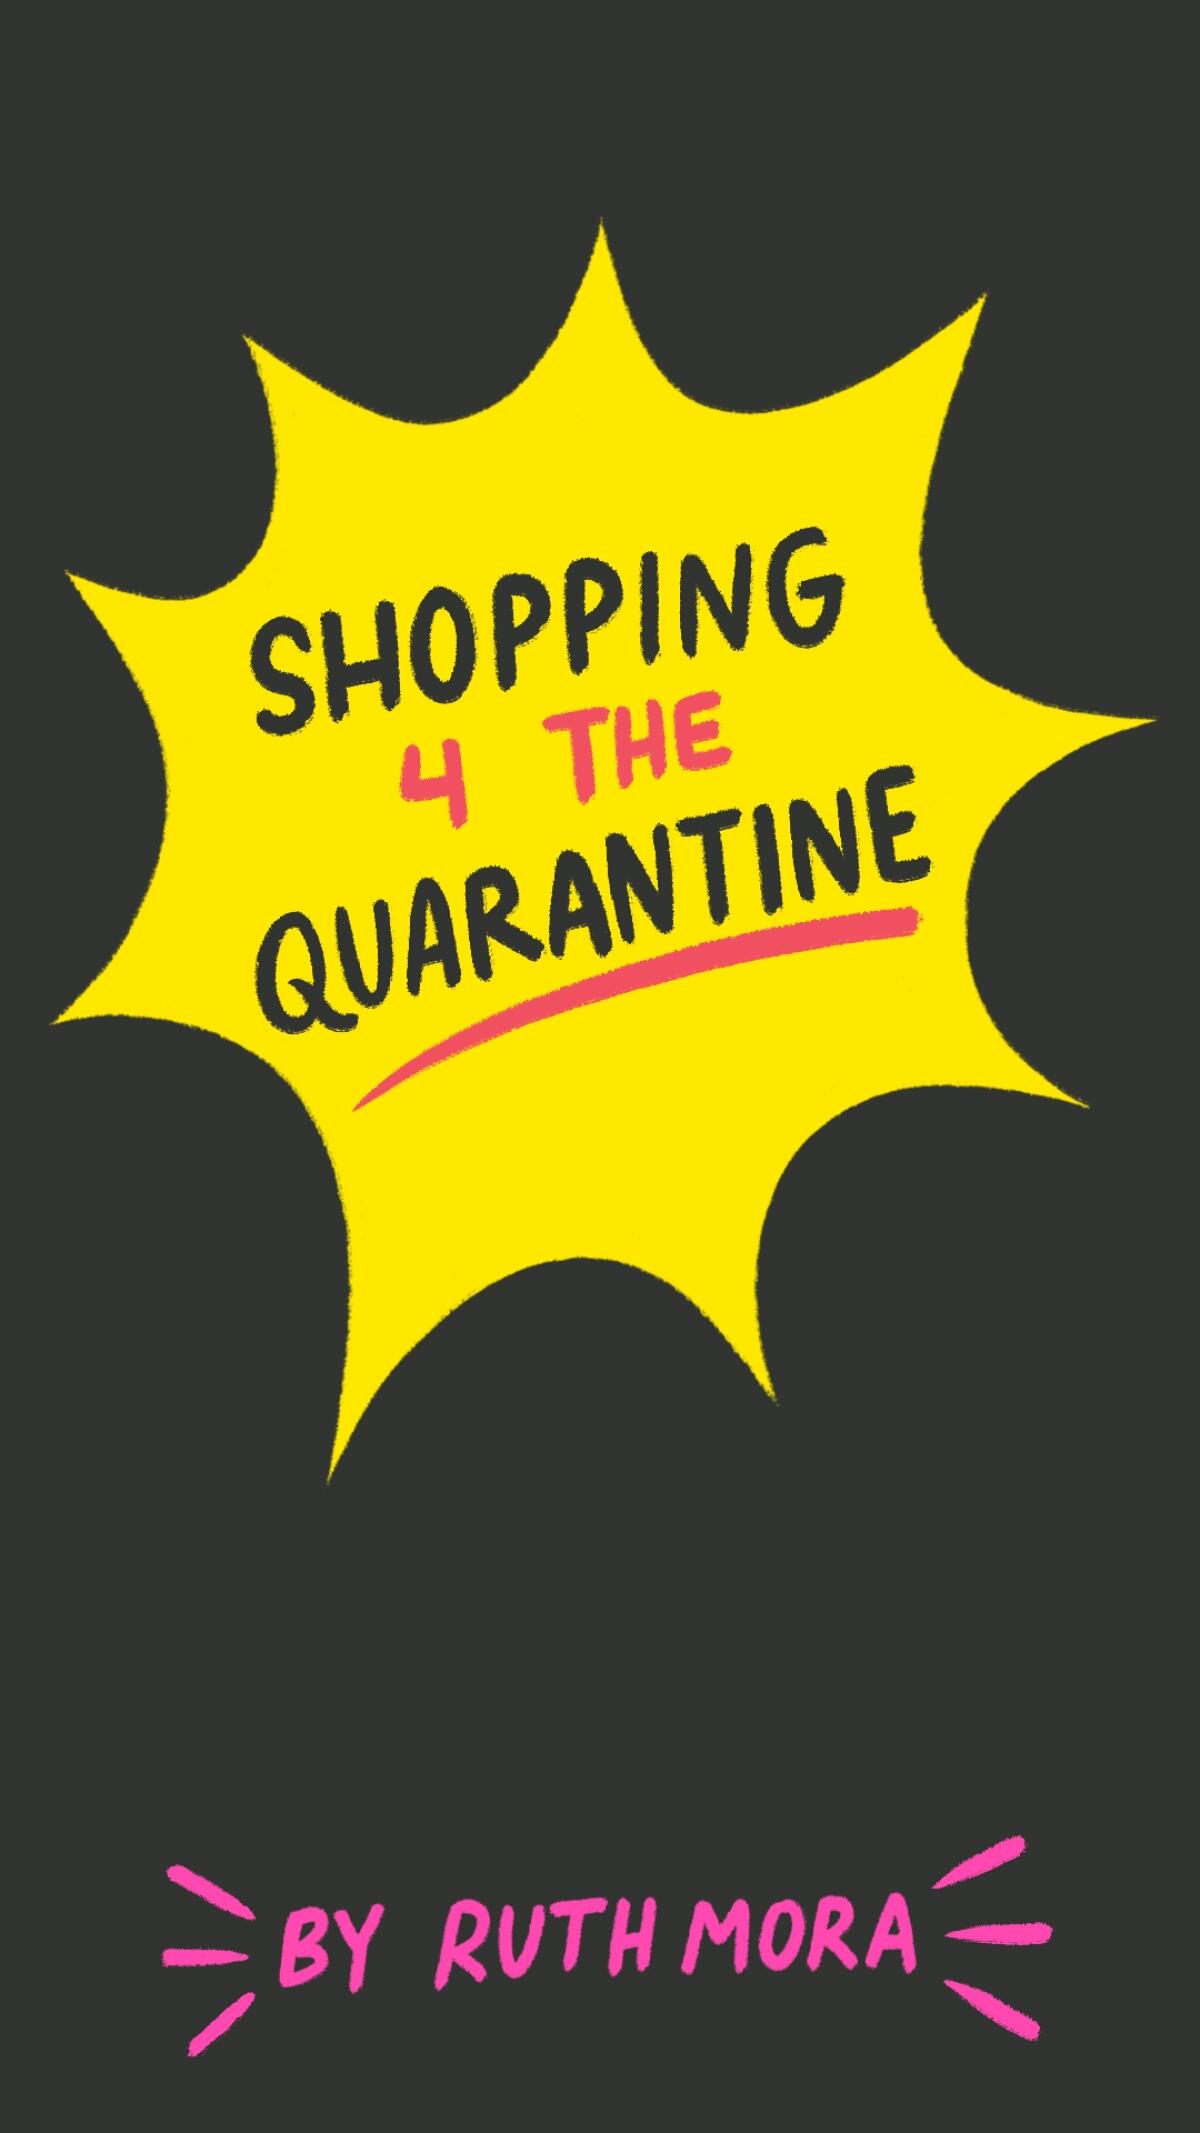 Shopping 4 the quarantine, a comic by Ruth Mora.